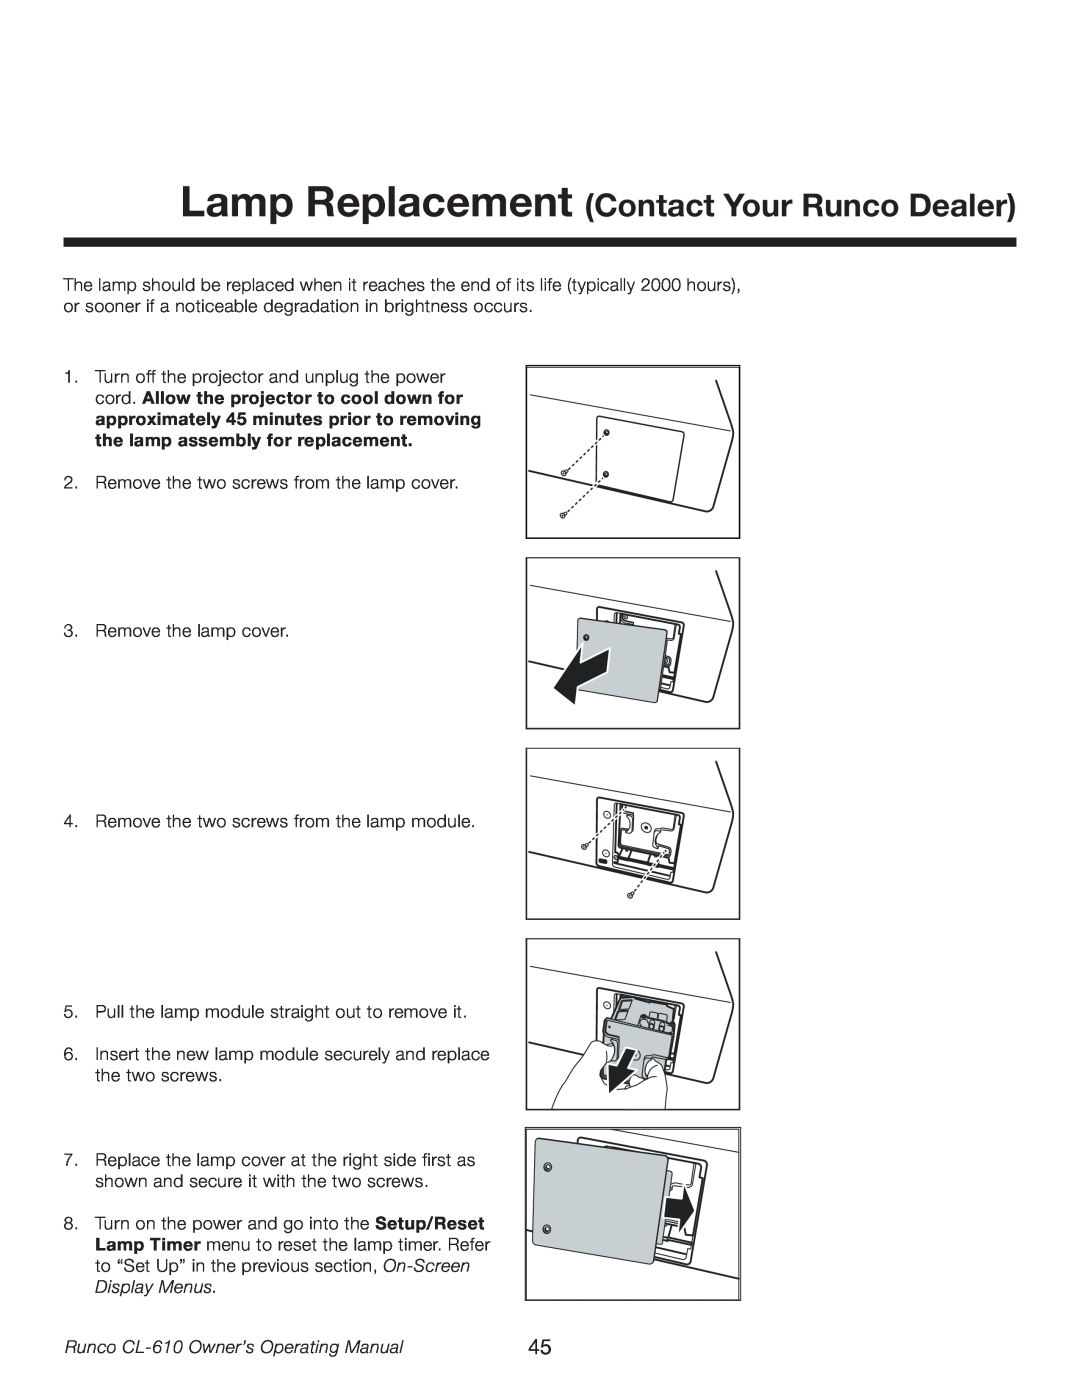 Runco CL-610LT manual Lamp Replacement Contact Your Runco Dealer, Runco CL-610 Owner’s Operating Manual 